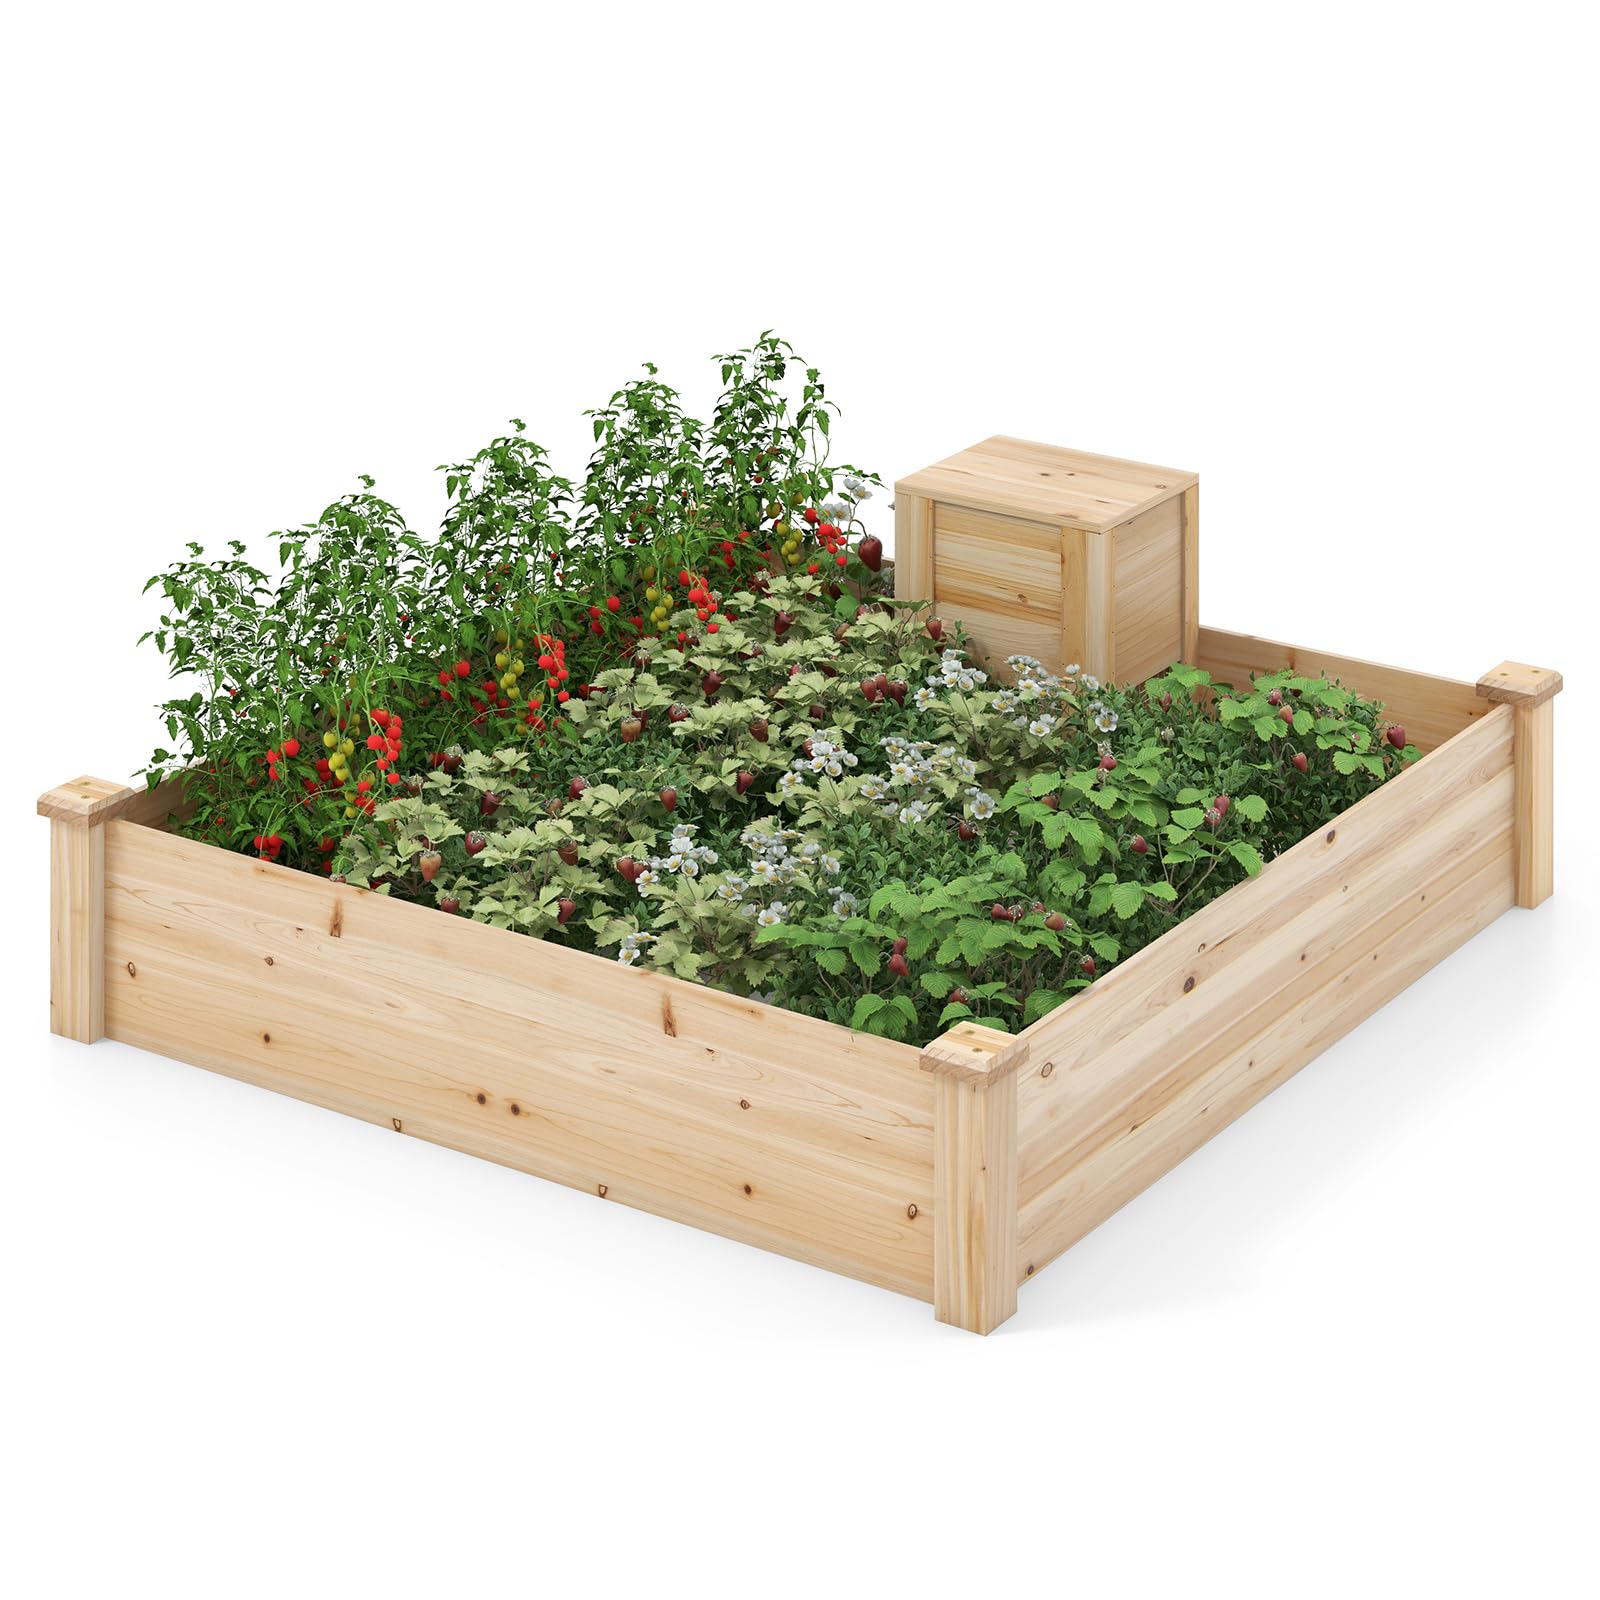 Giantex Raised Garden Bed